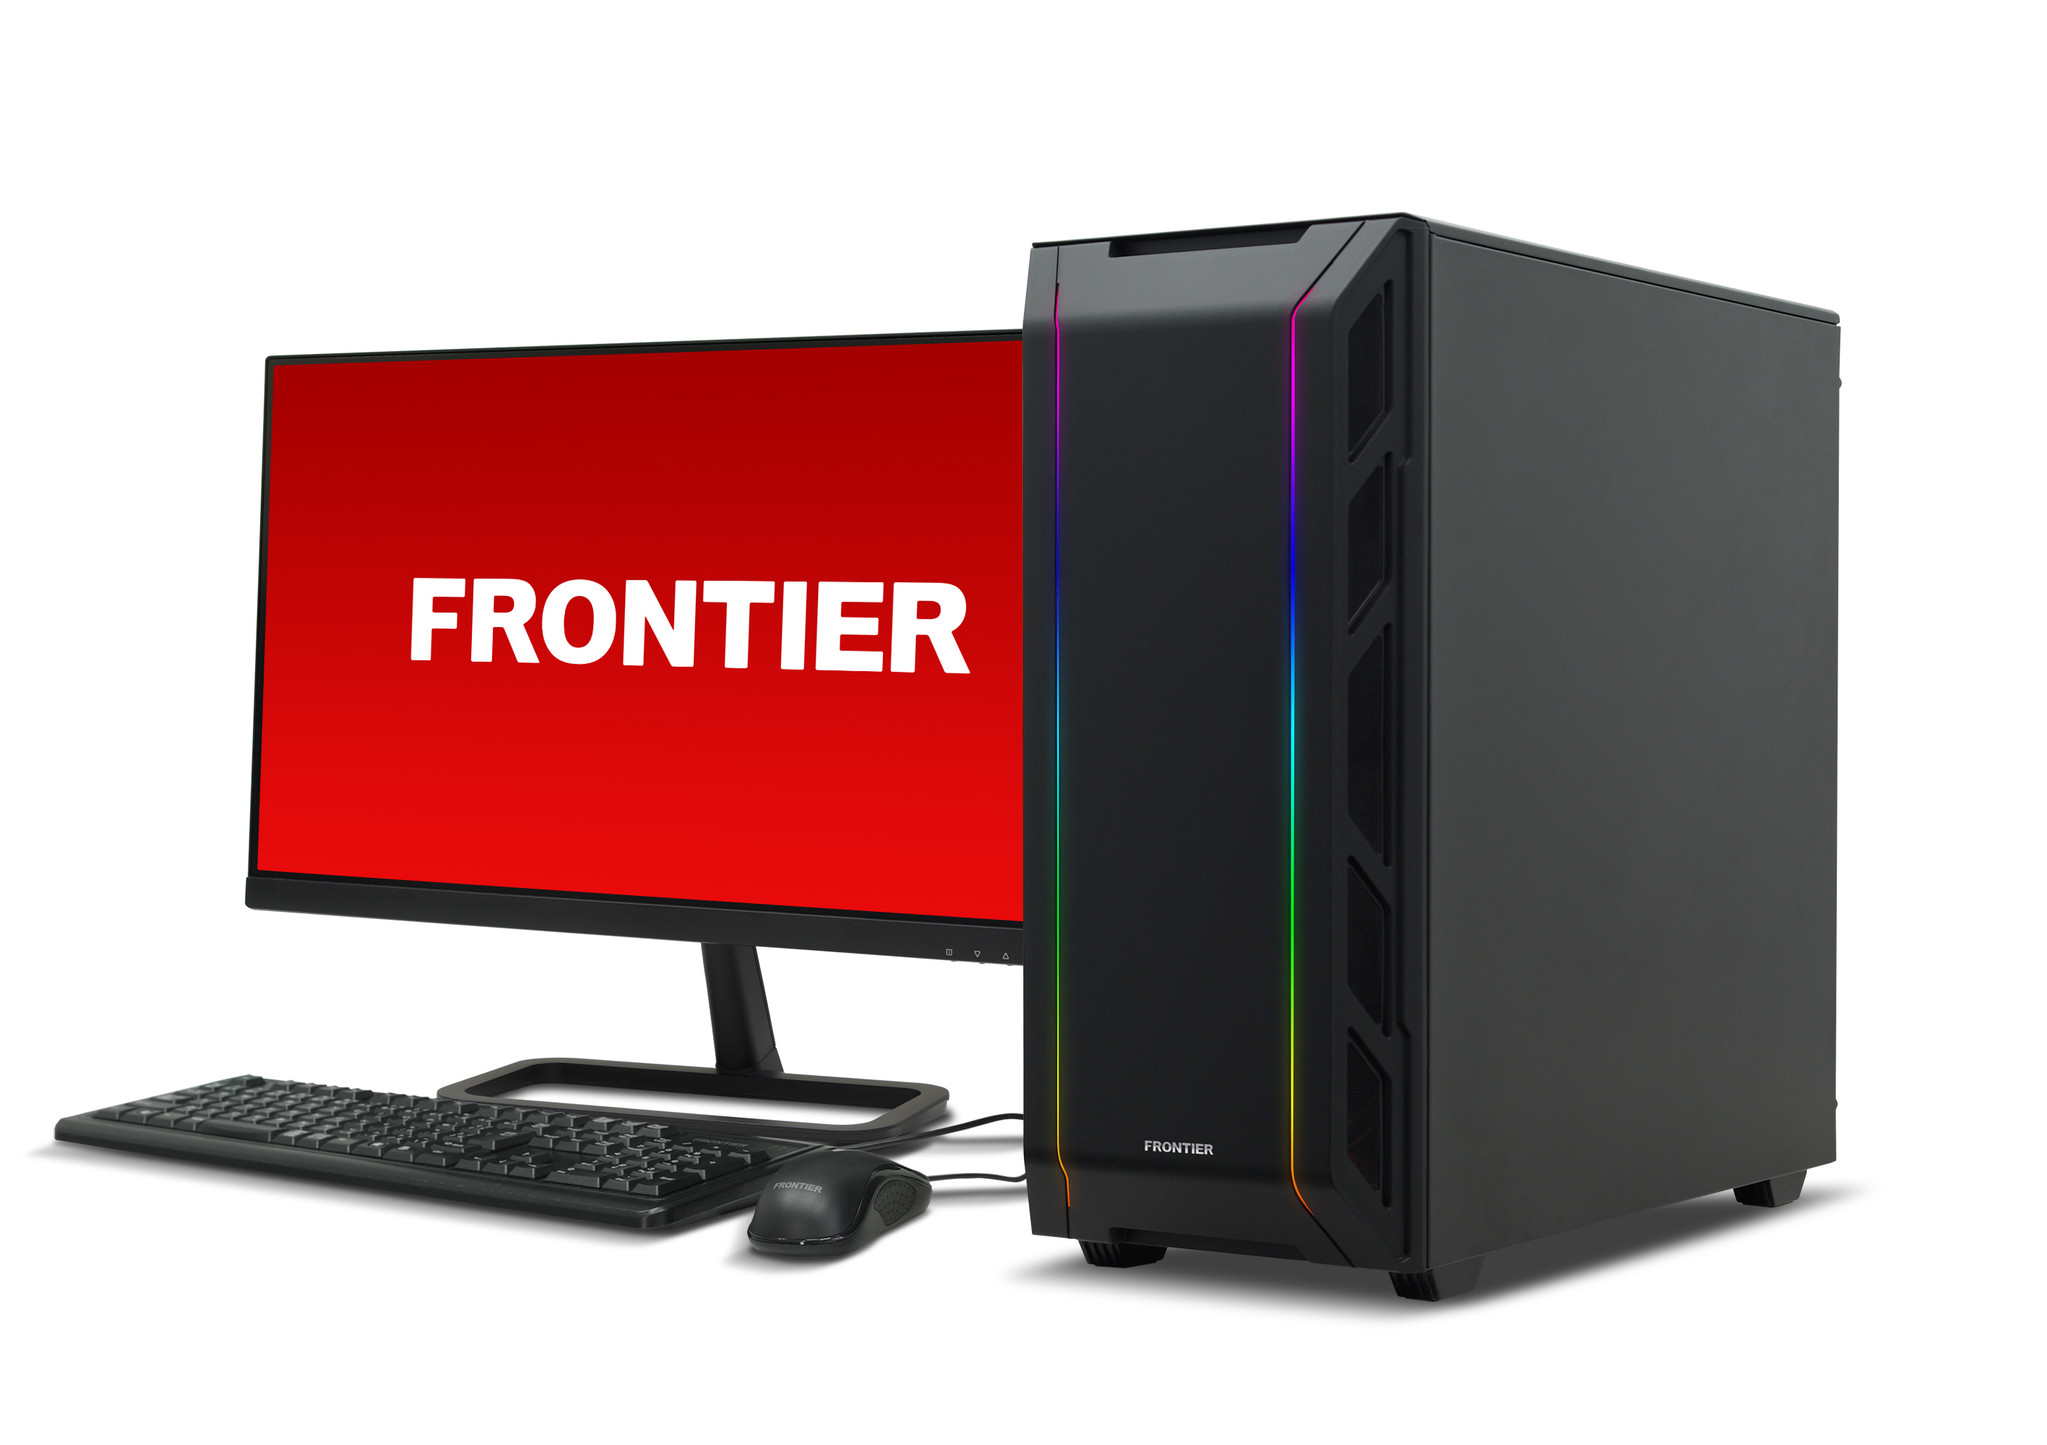 Frontier Z490チップセット 第10世代 インテル Core プロセッサー搭載デスクトップpc Ghシリーズ 3機種を発売 インバースネット株式会社のプレスリリース